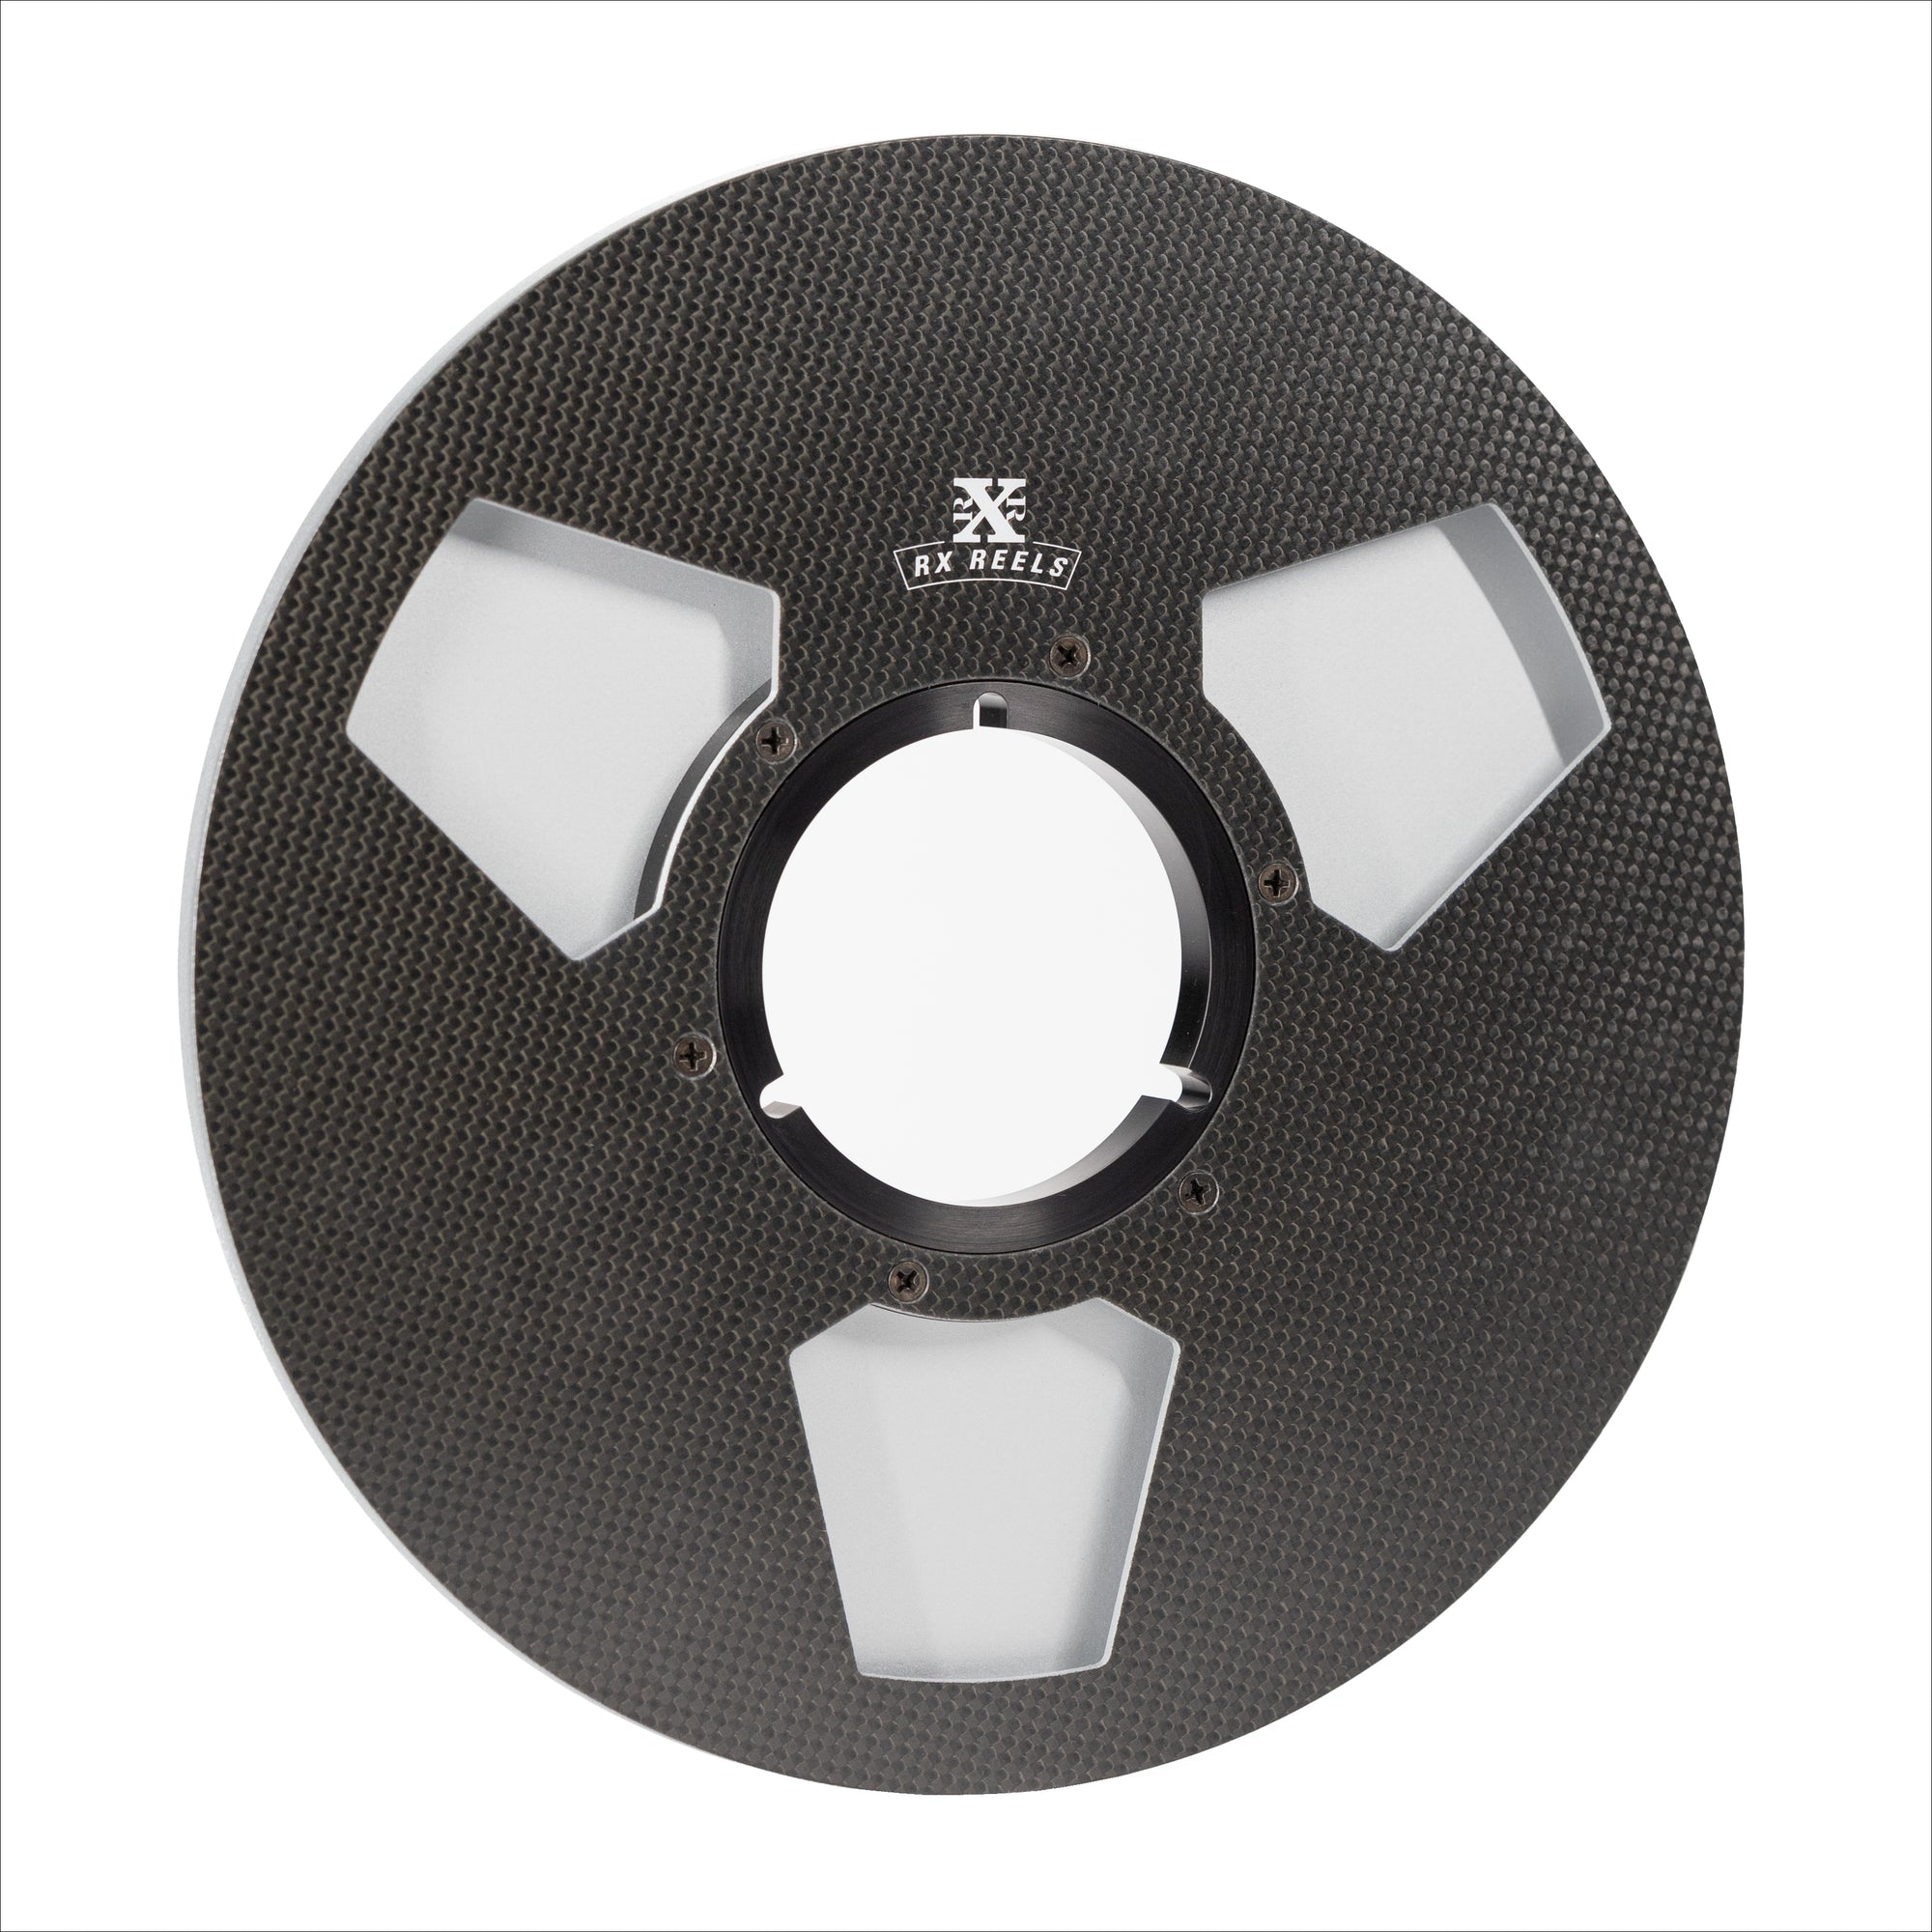 Carbon Fiber 10.5" Tape Reel - Edge Design in Silver Metallic